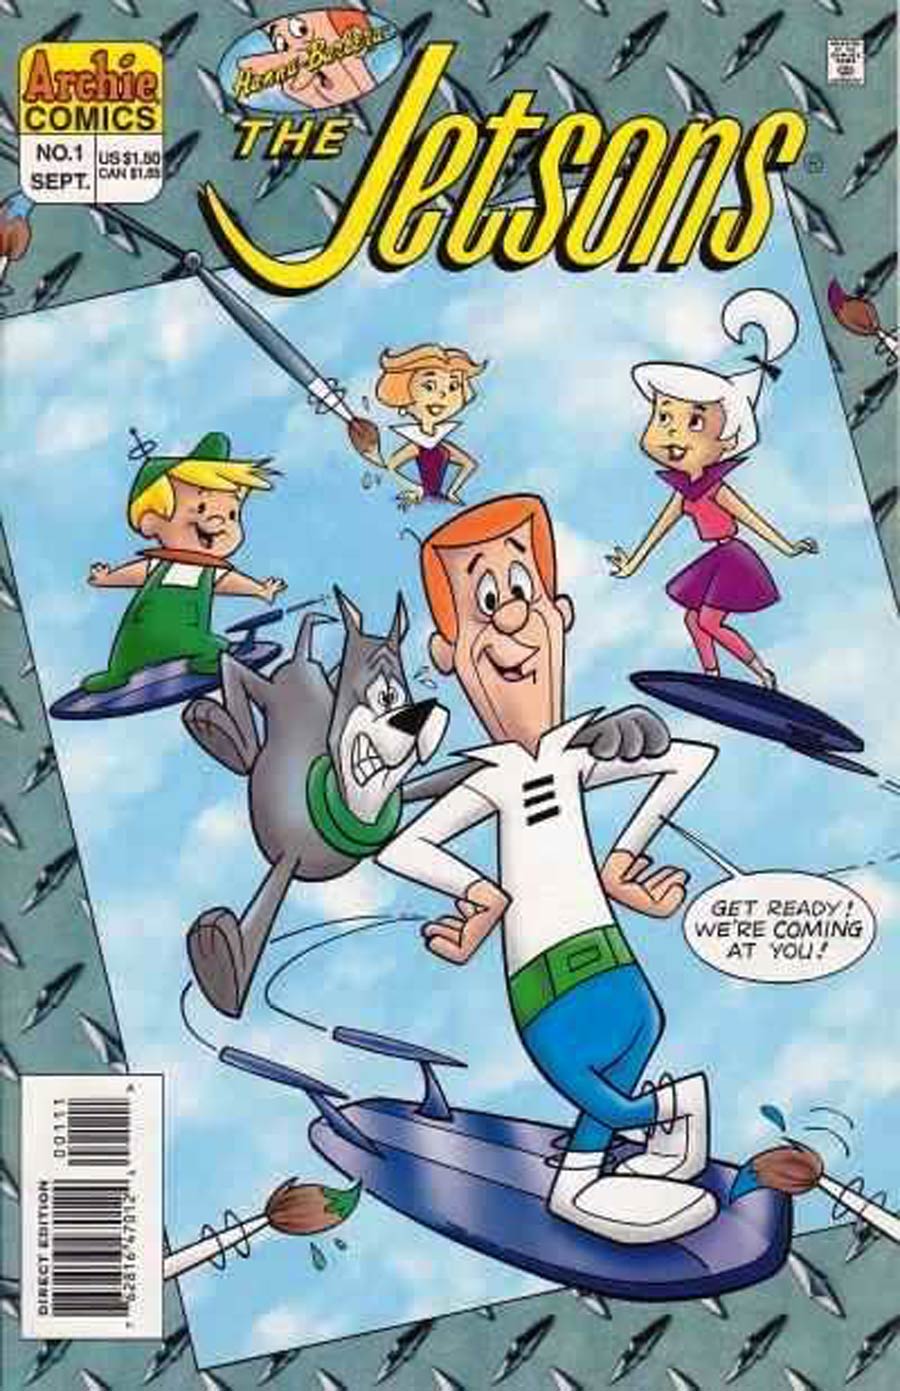 Jetsons (Archie) #1